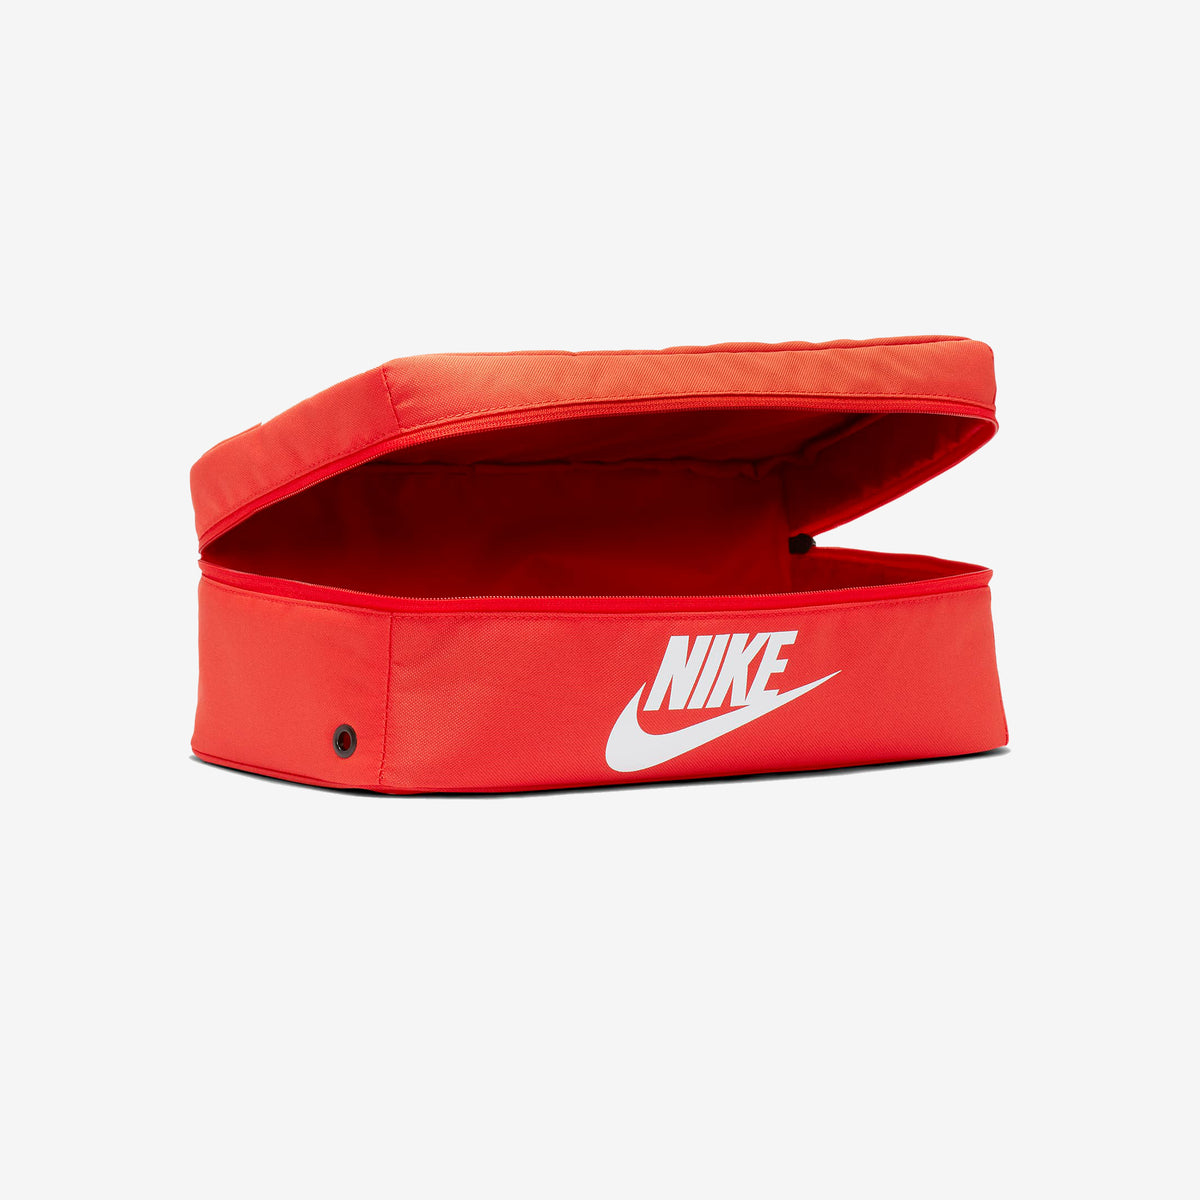 Nike Shoebox Bag - Niky's Sports